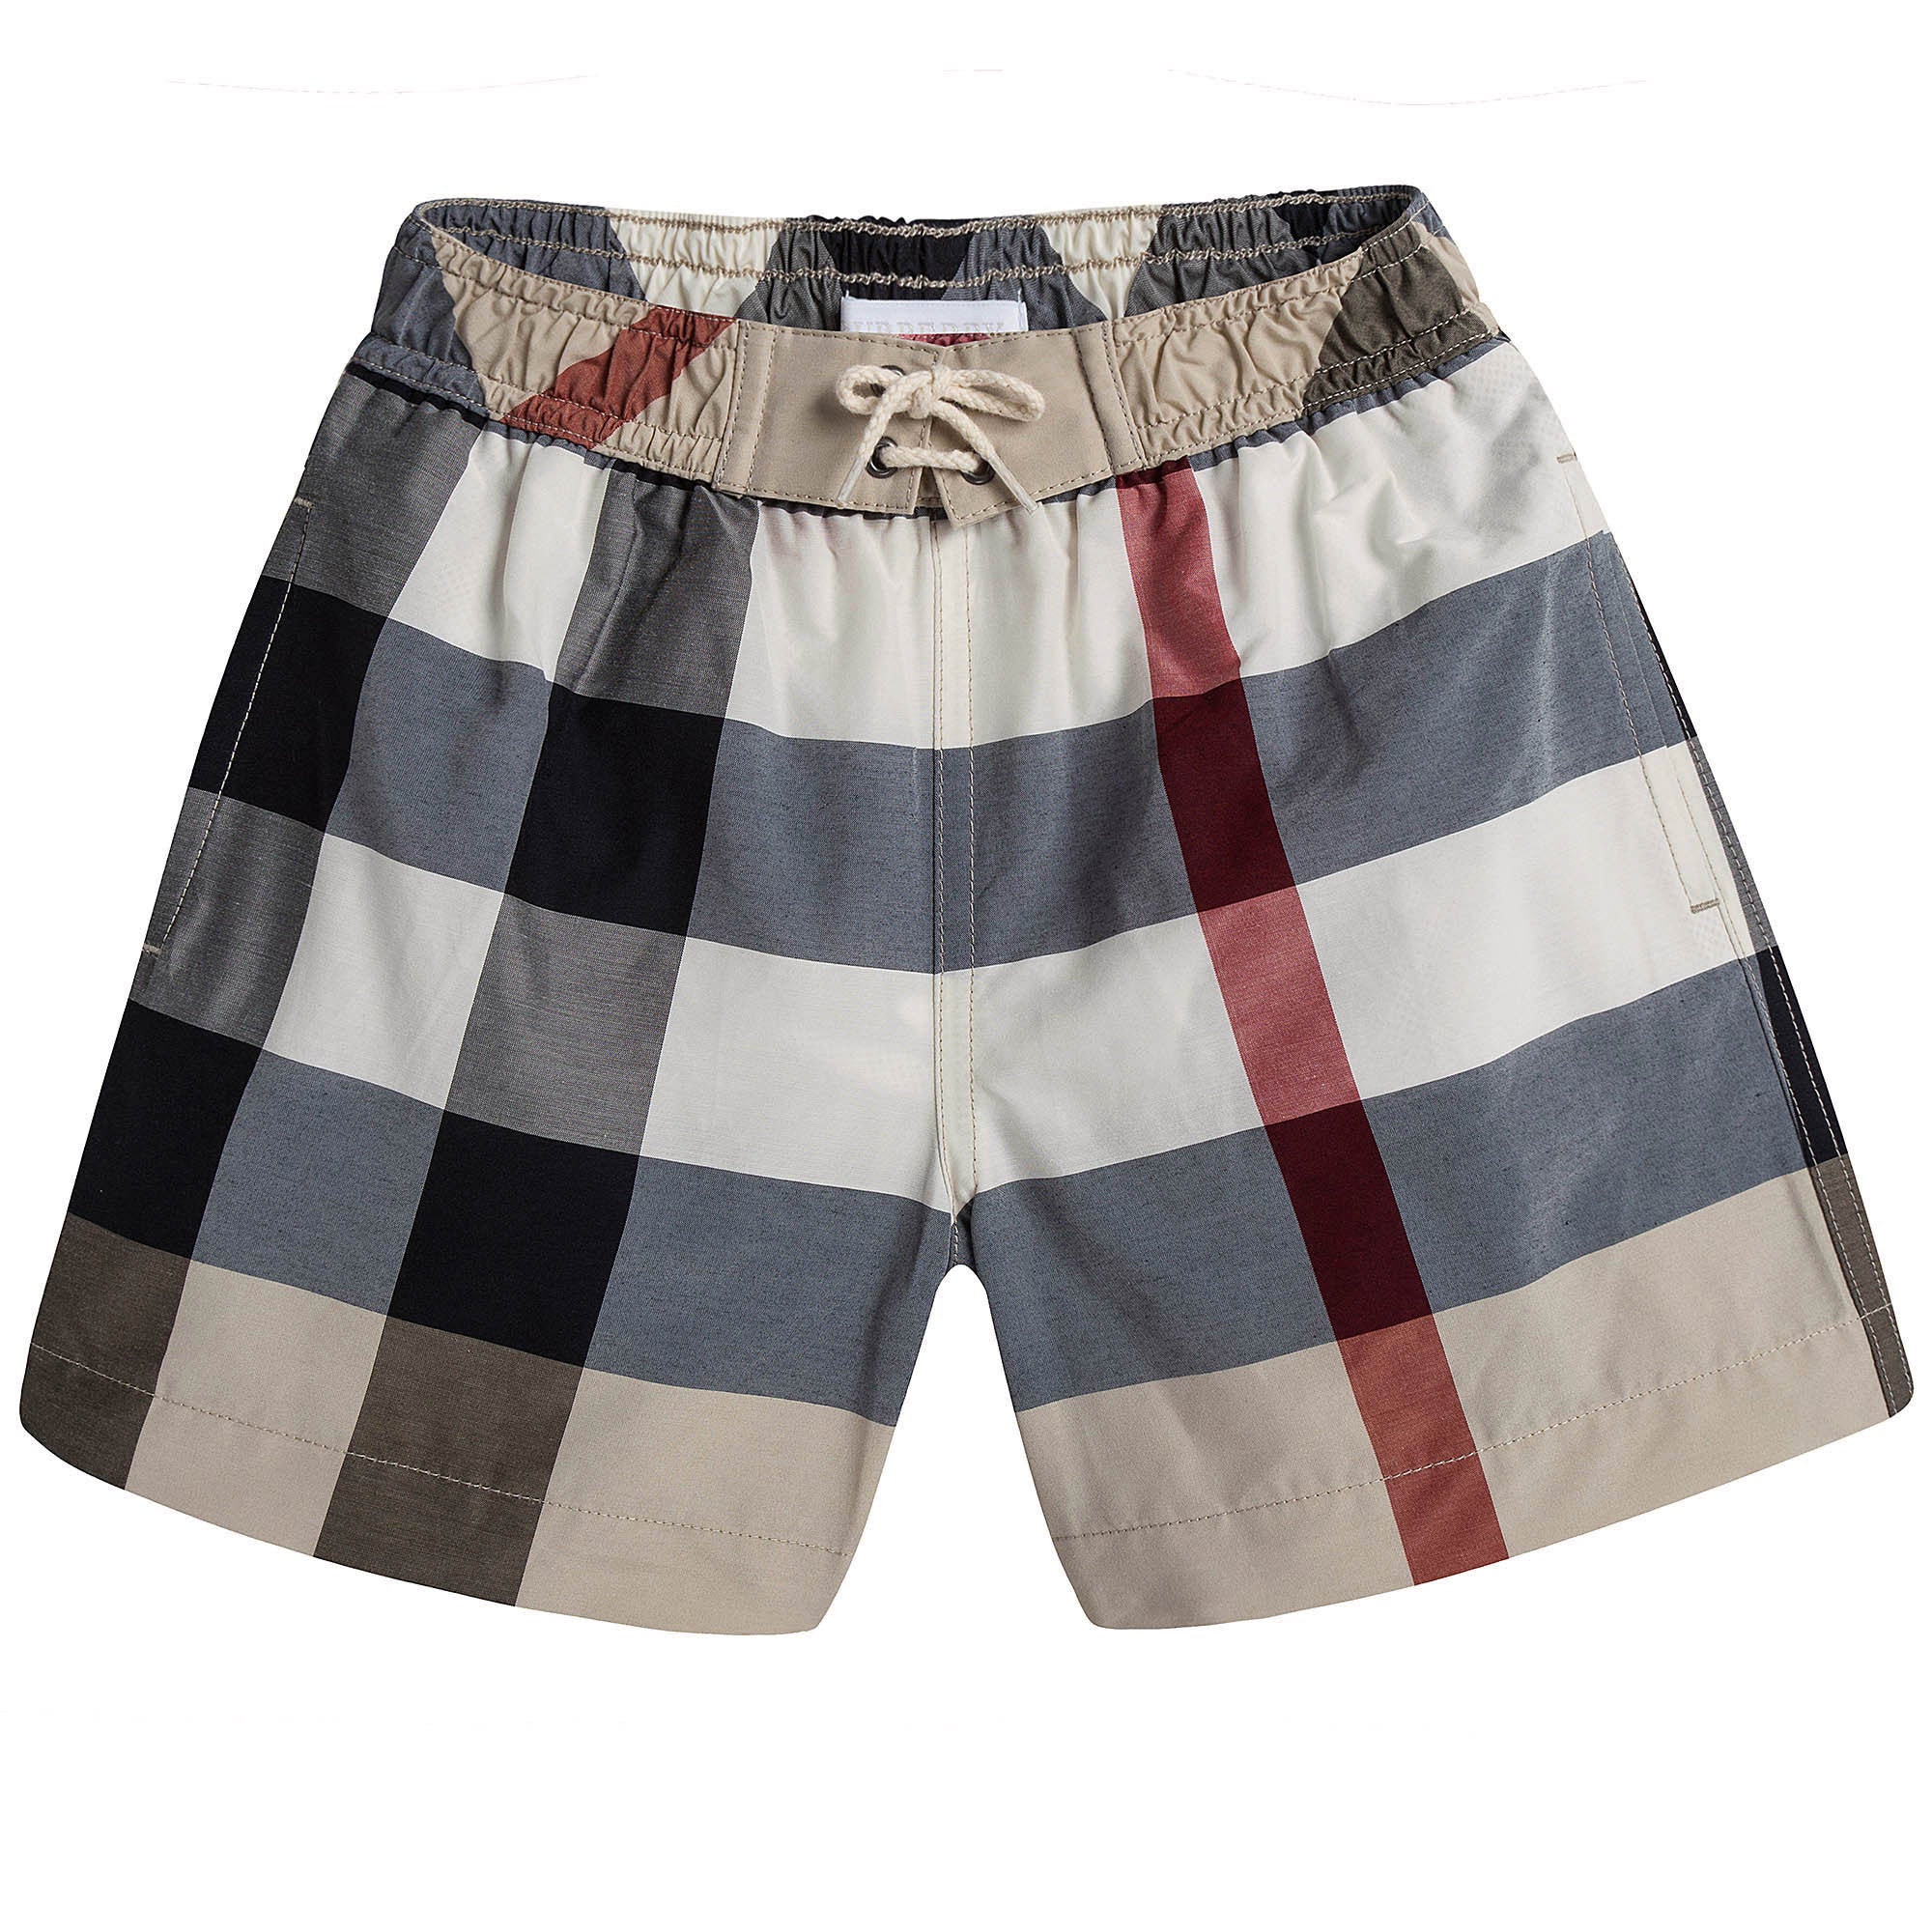 Boys Beige Check Swim Shorts - CÉMAROSE | Children's Fashion Store - 1